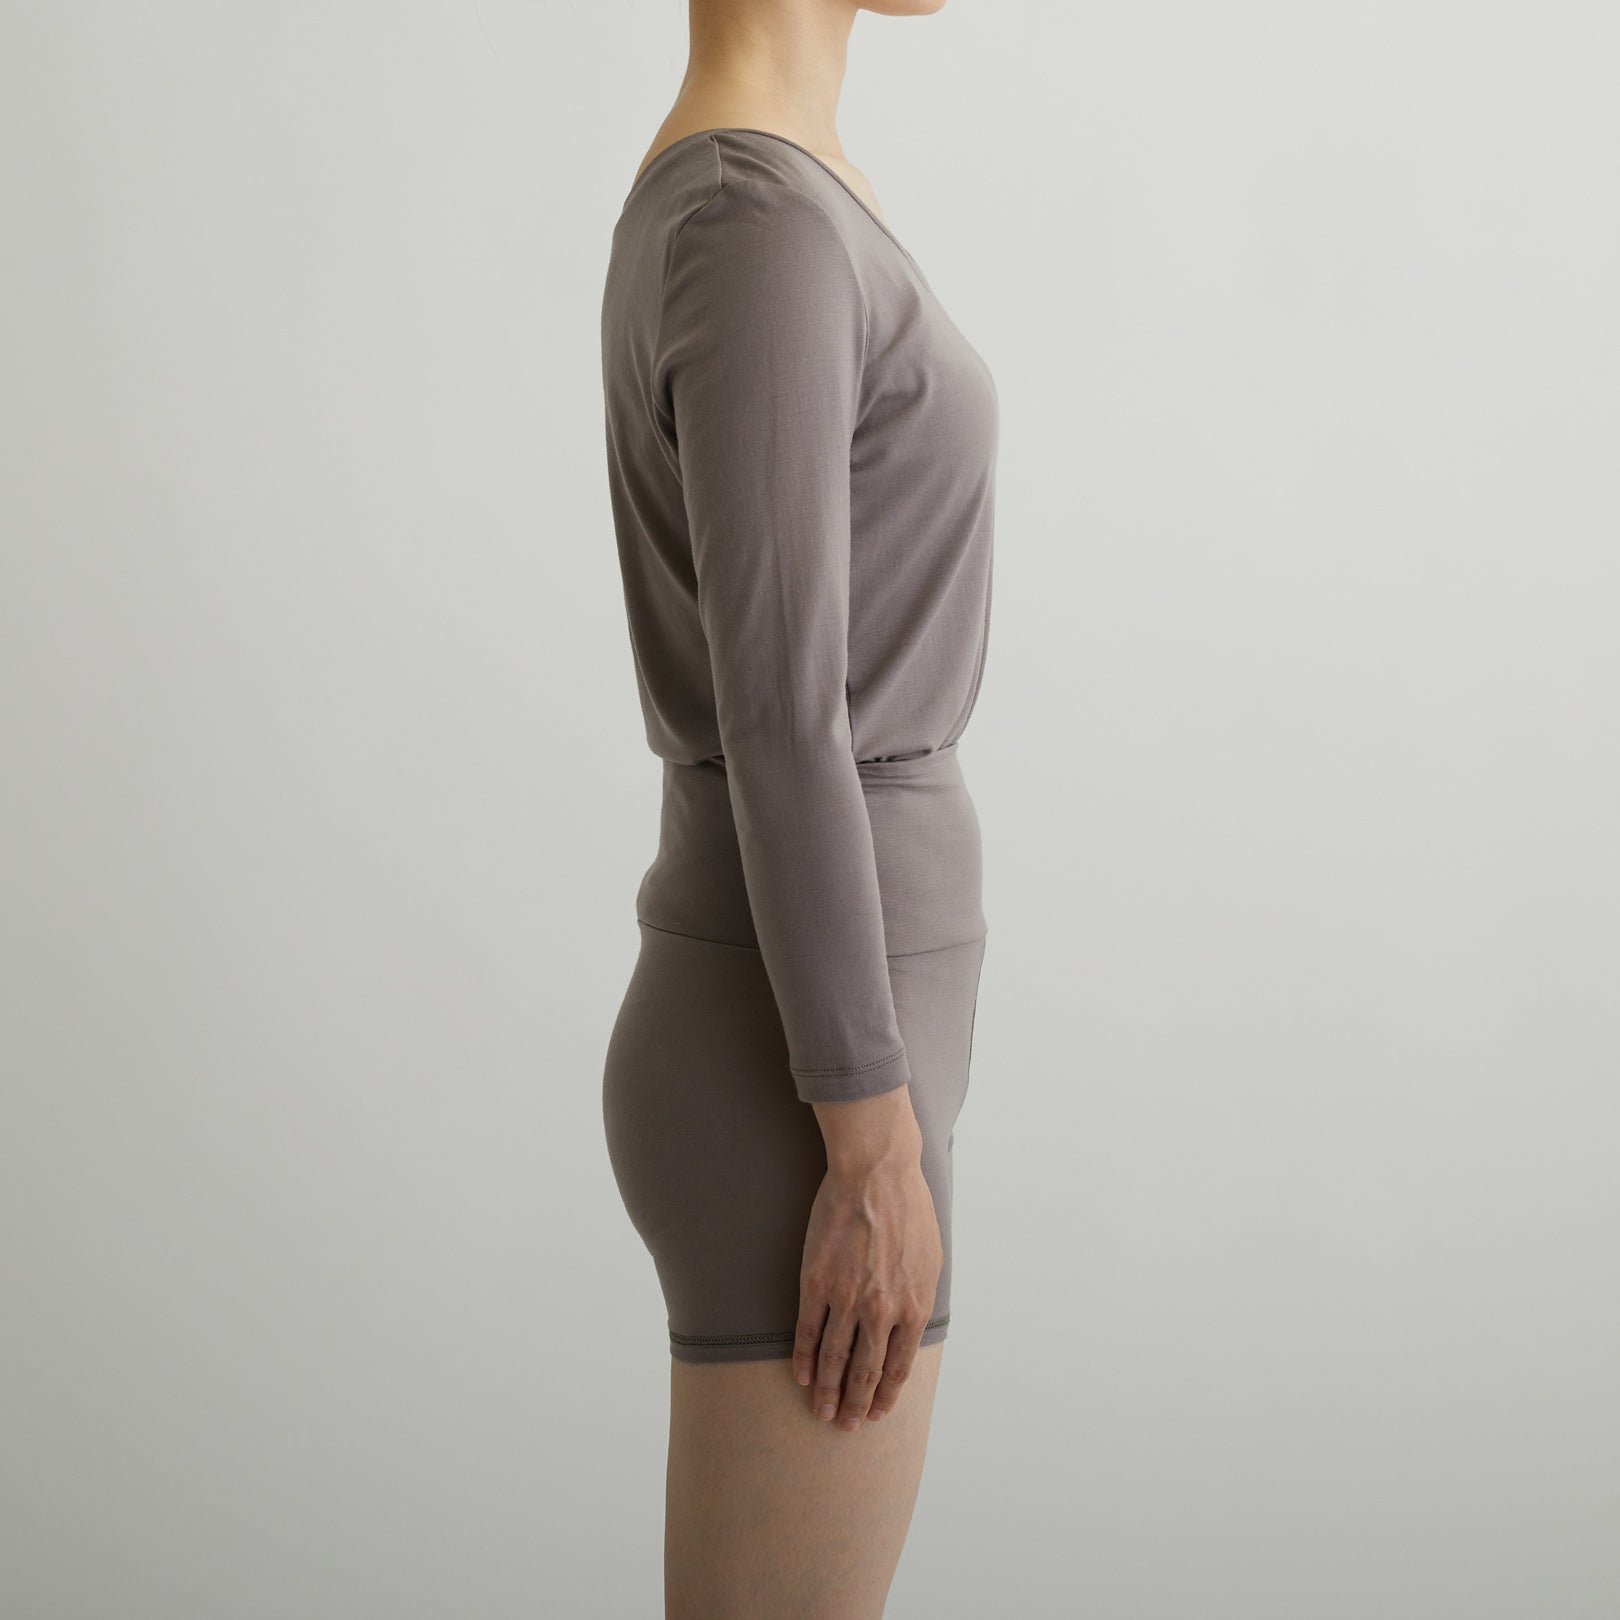 100% Merino Wool Jersey High Waist Shorts in Black (2022 model)